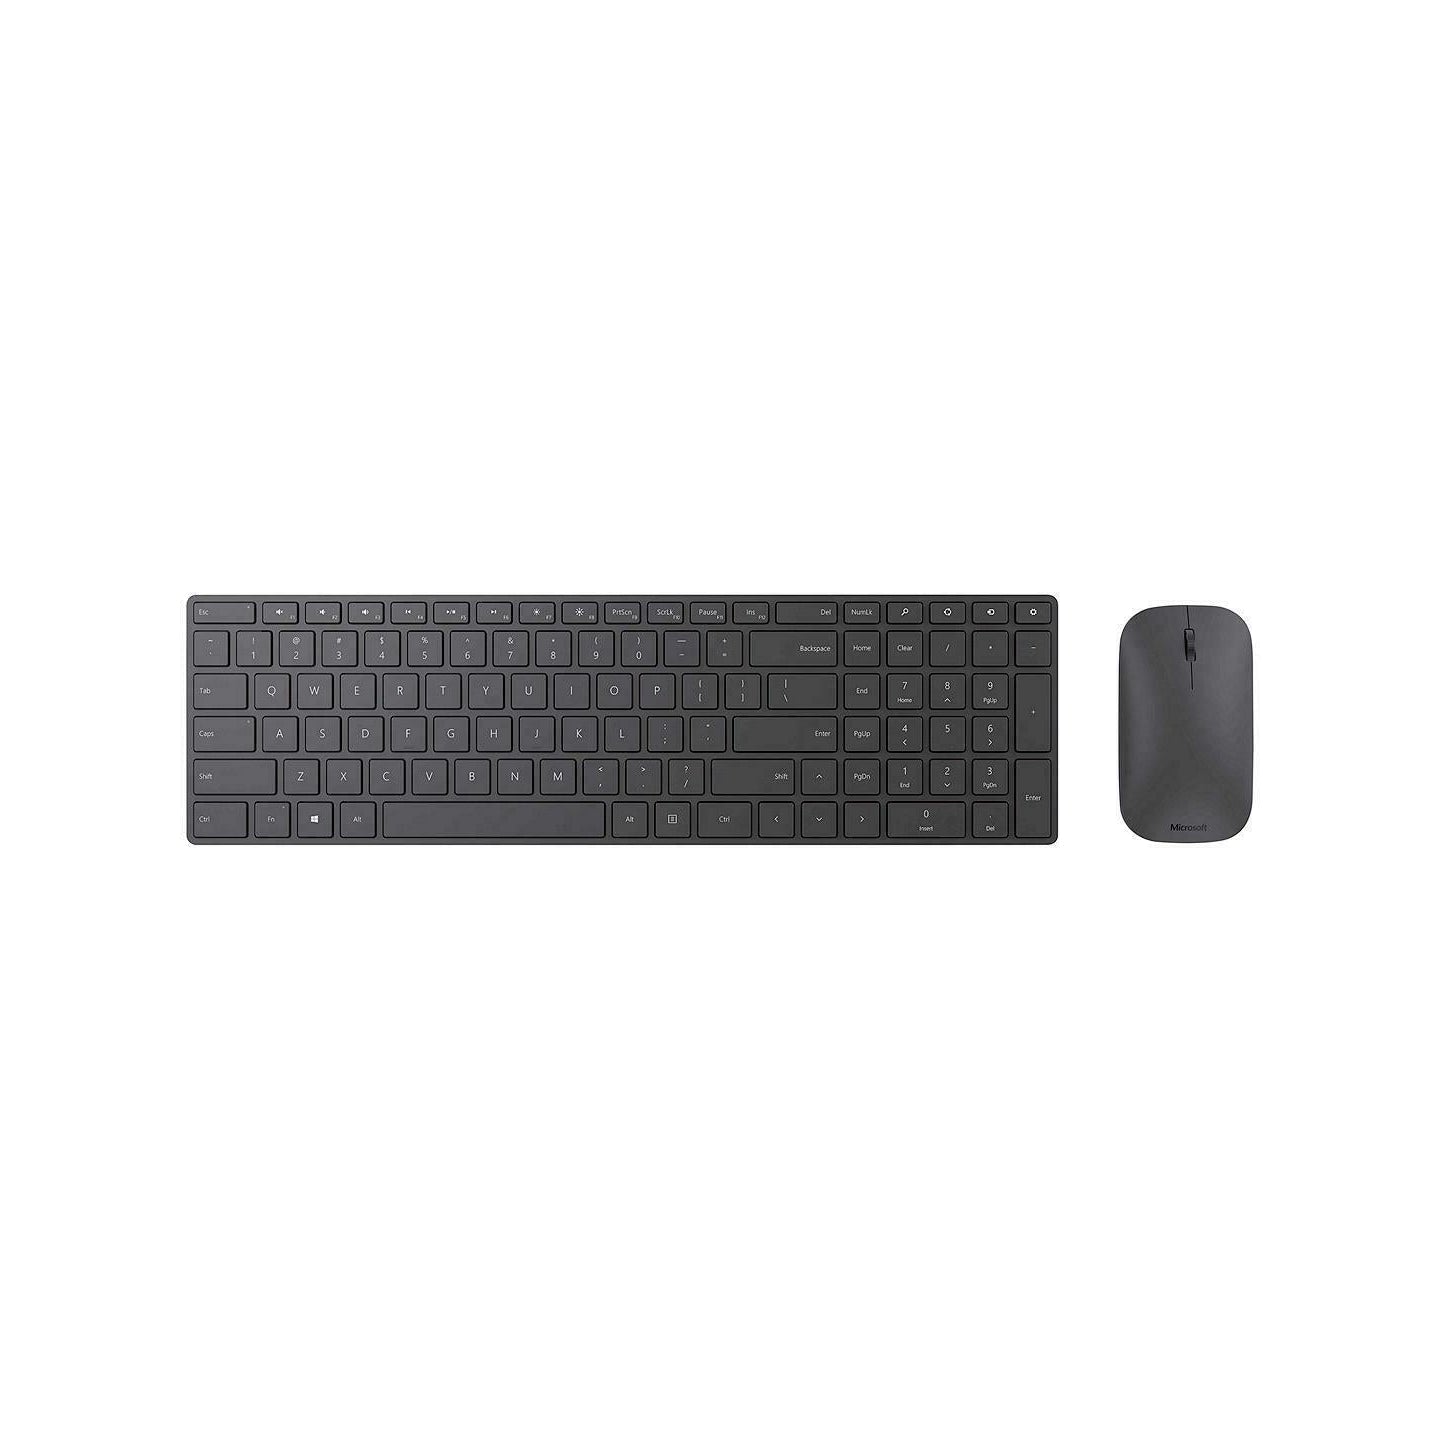 Microsoft Designer Bluetooth Wireless Desktop Keyboard and Mouse Set in Black